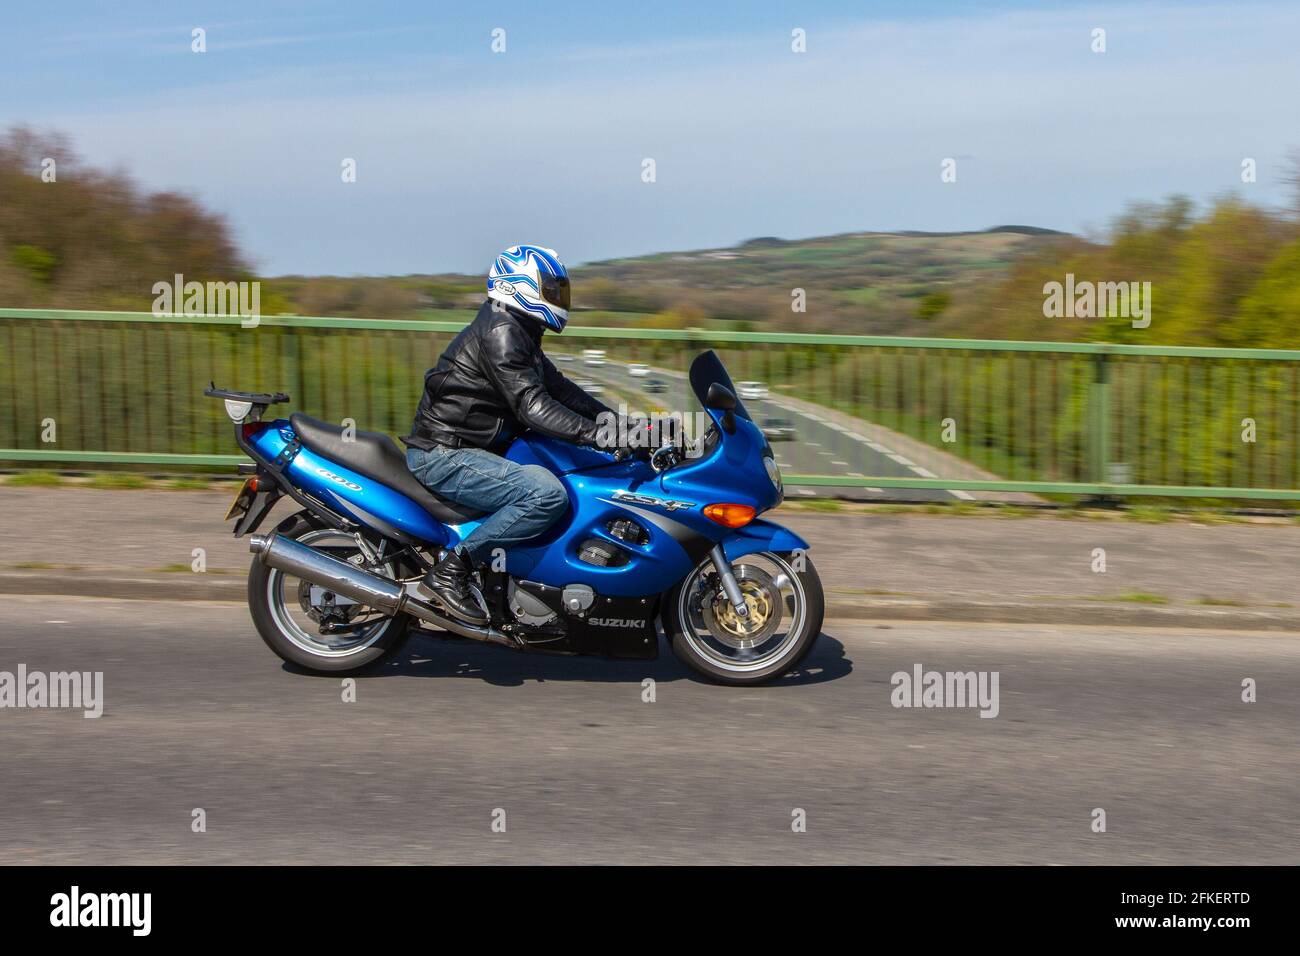 2000 Suzuki Gsx 600 Fy Motorbike rider; two wheeled transport, motorcycles, vehicle, roads, motorbikes, motorcycle bike riders motoring in Chorley, UK Stock Photo